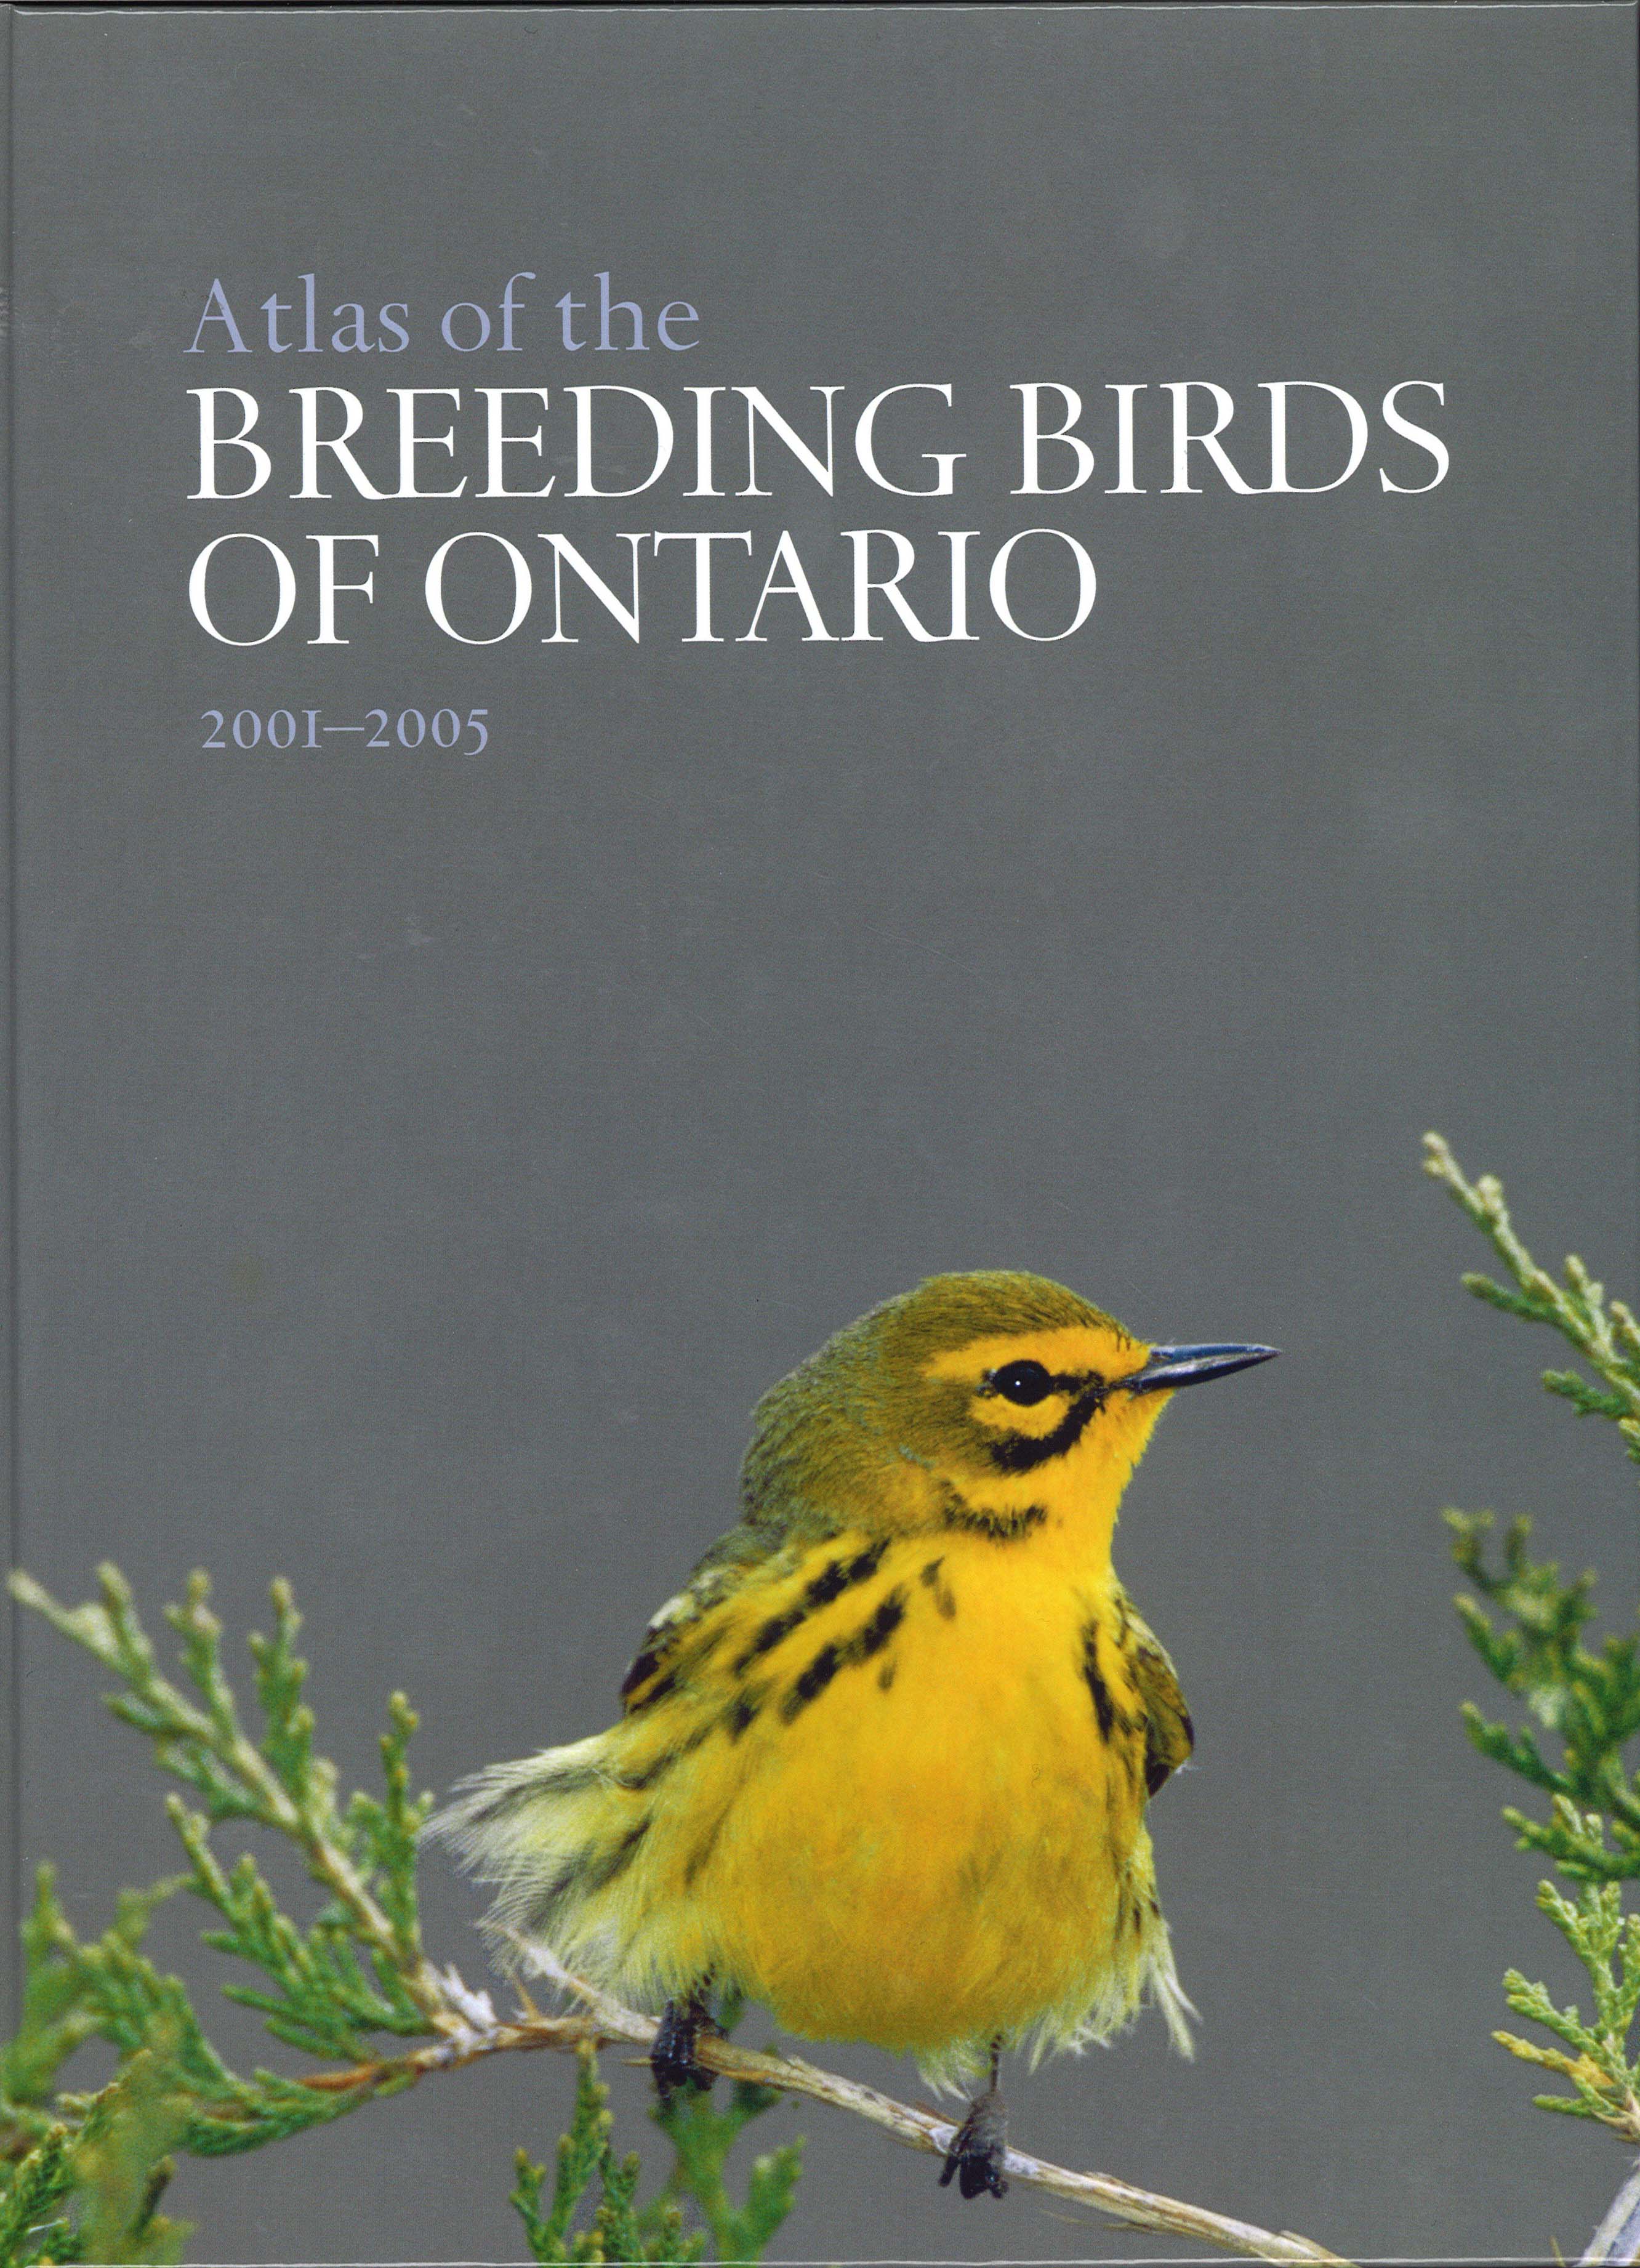 Atlas of the Breeding Birds of Ontario